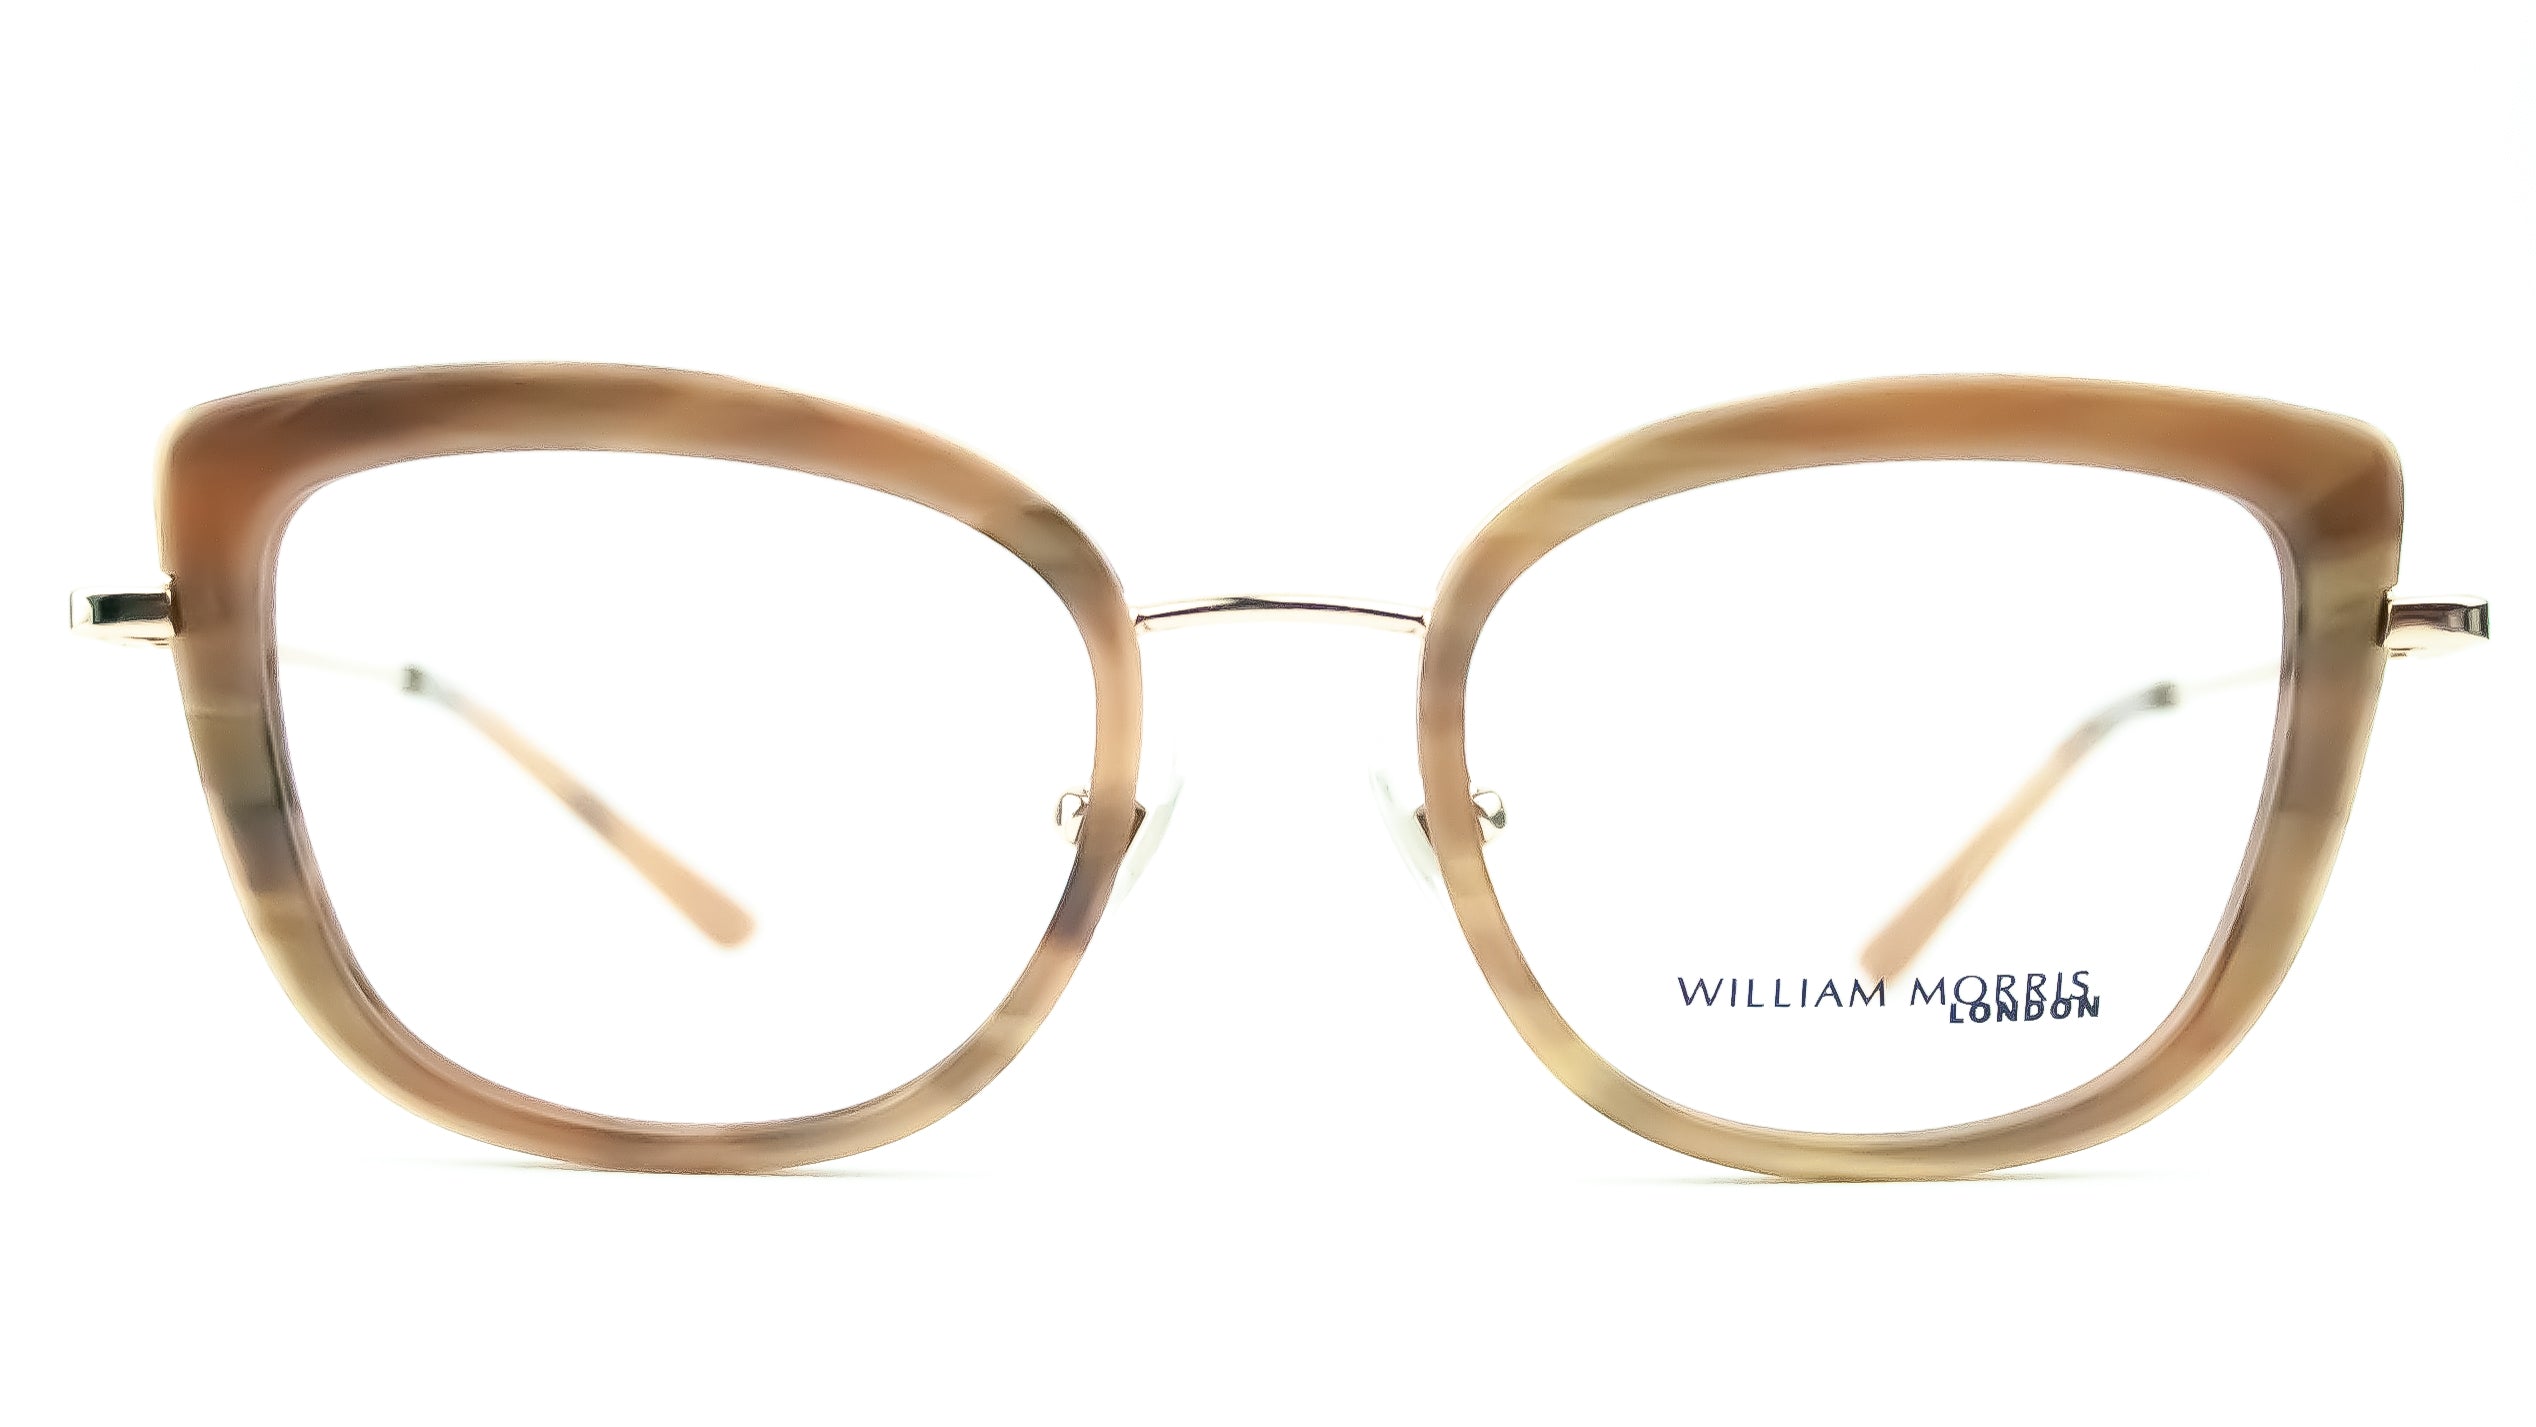 William Morris London LN50151 Cat Eye Brown Glasses Frames